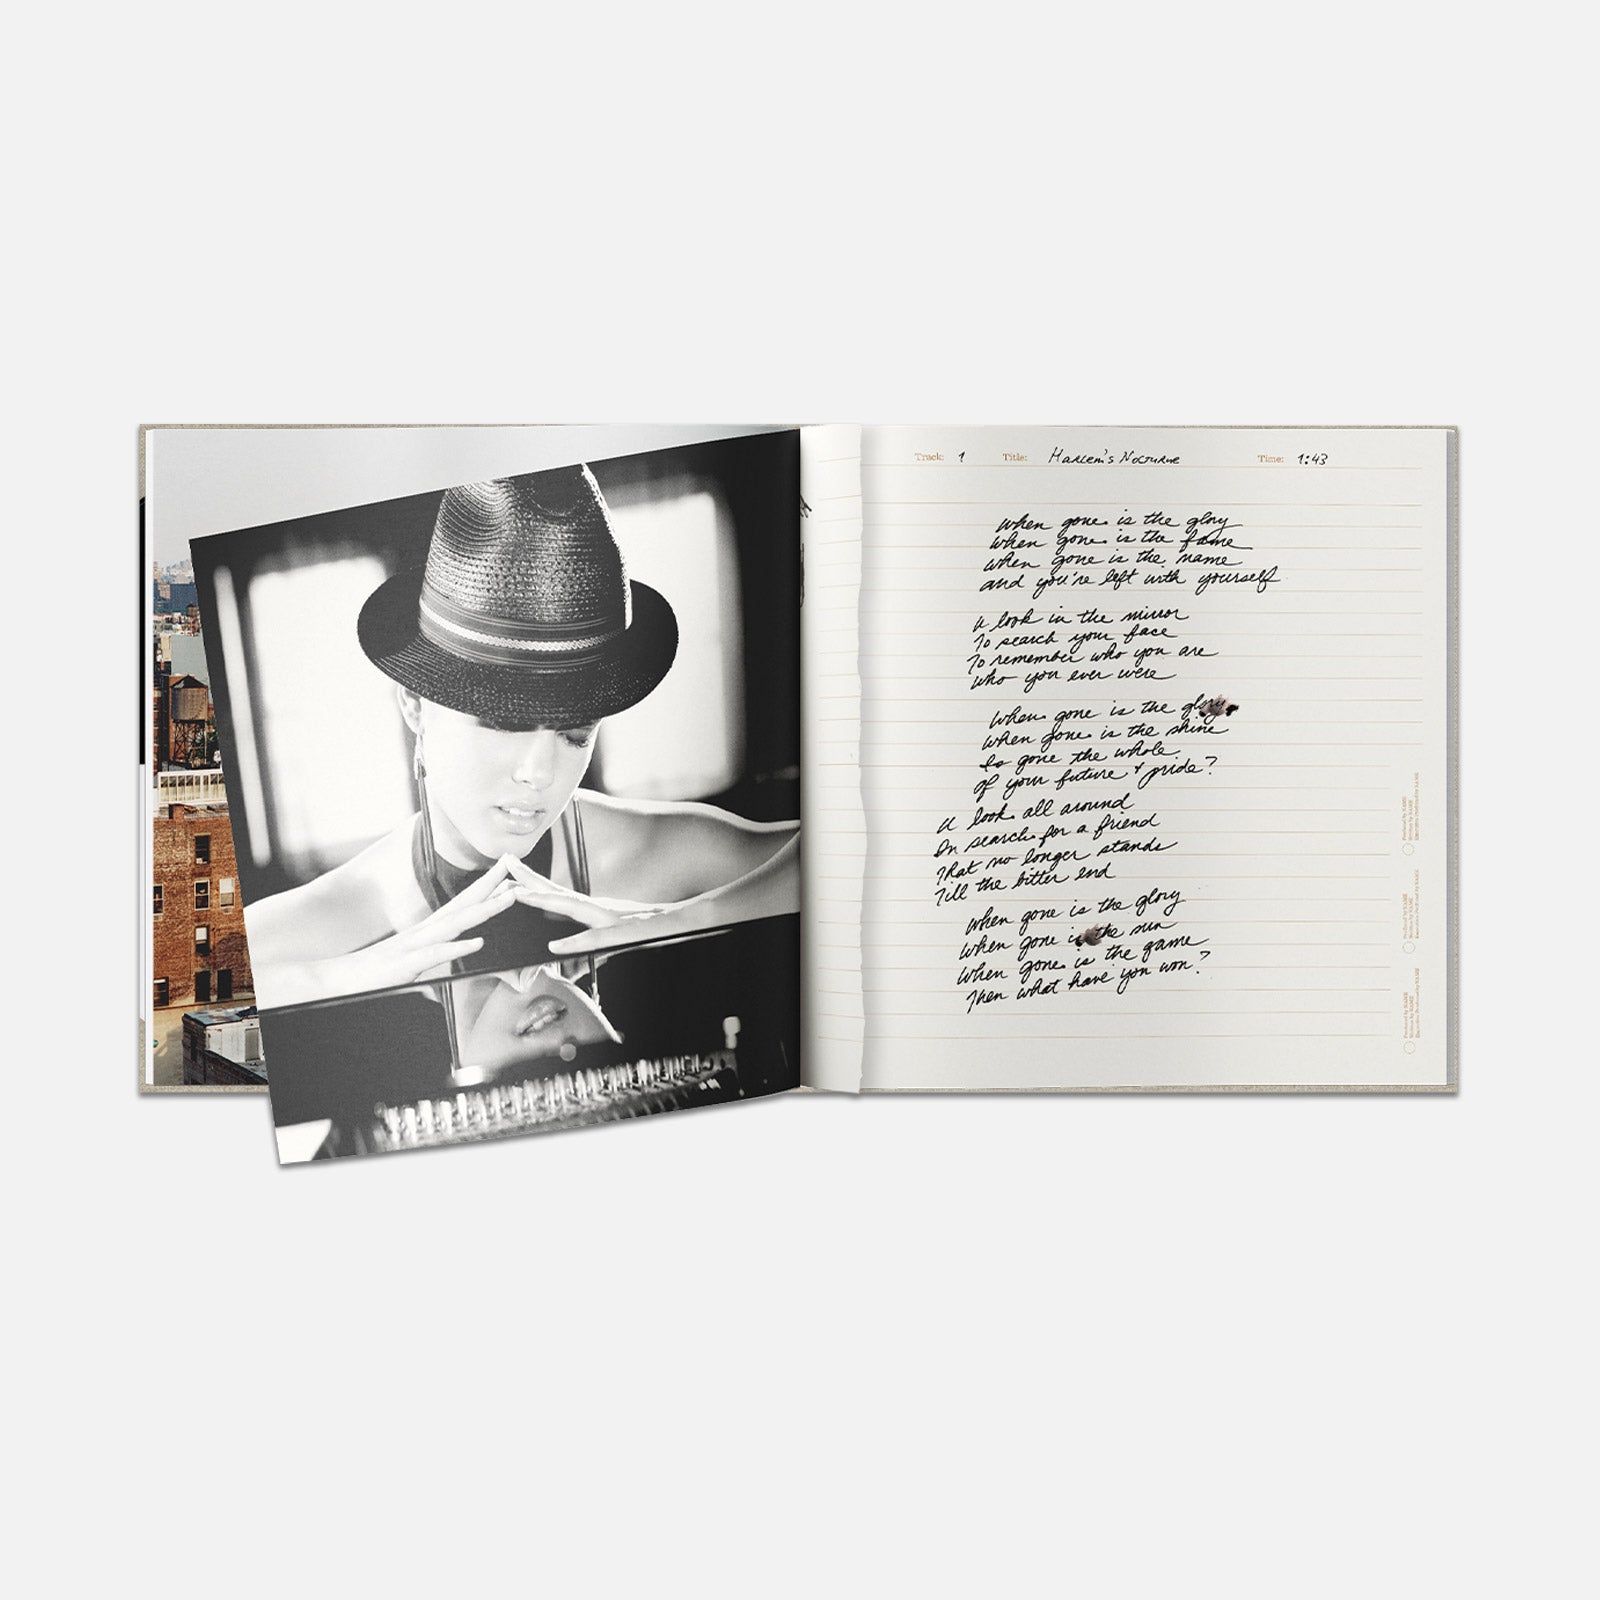 Alicia Keys 'The Diary of Alicia Keys (VMP 20th Anniversary Edition)' -  Vinyl Me, Please